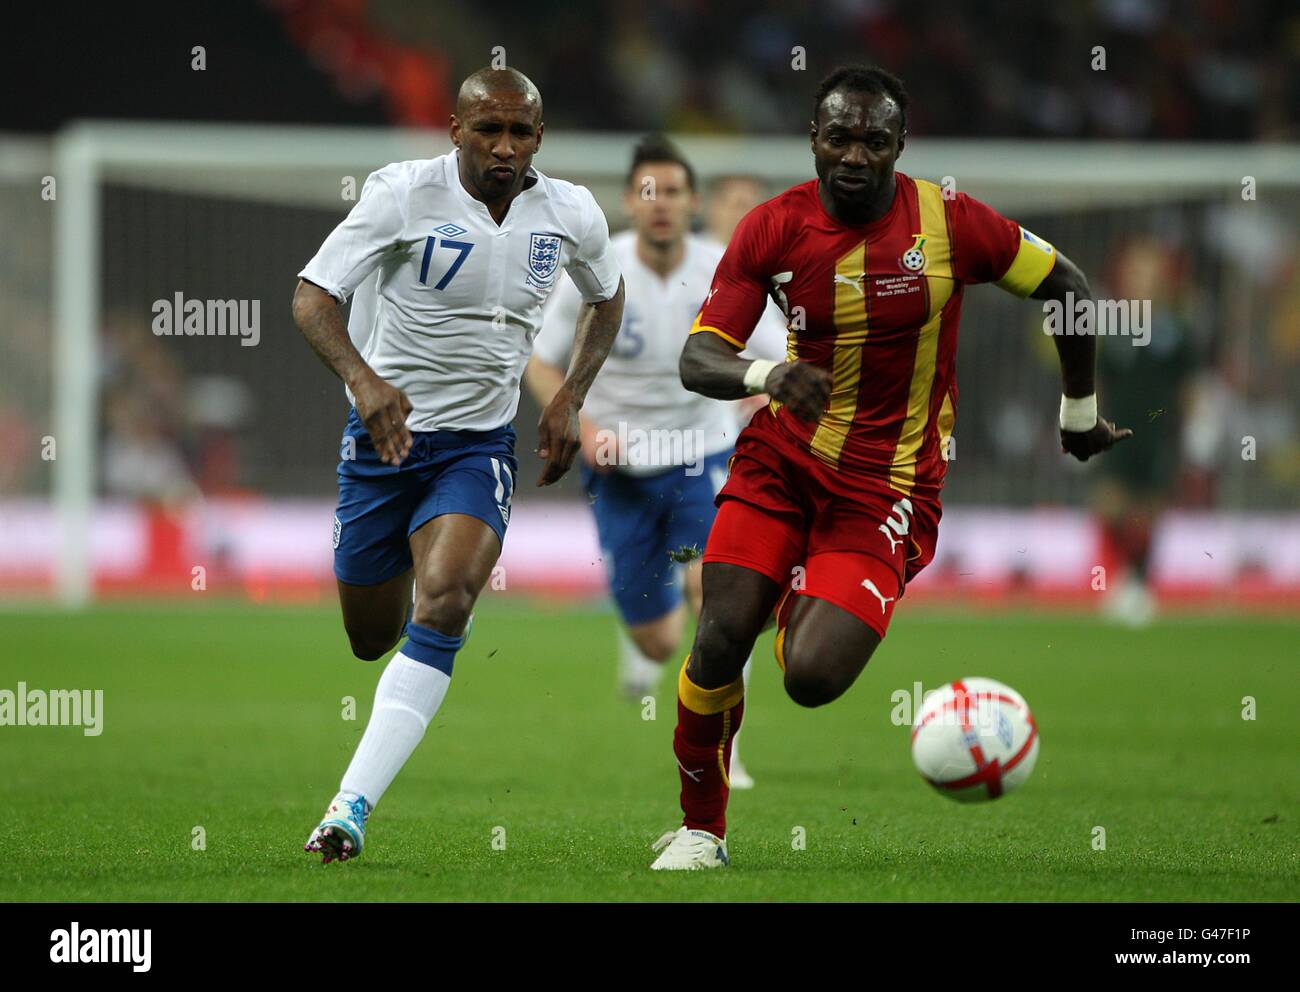 Soccer - International Friendly - England v Ghana - Wembley Stadium. England's Jermain Defoe (left) and Ghana's Jonathan Mensah race for the ball Stock Photo